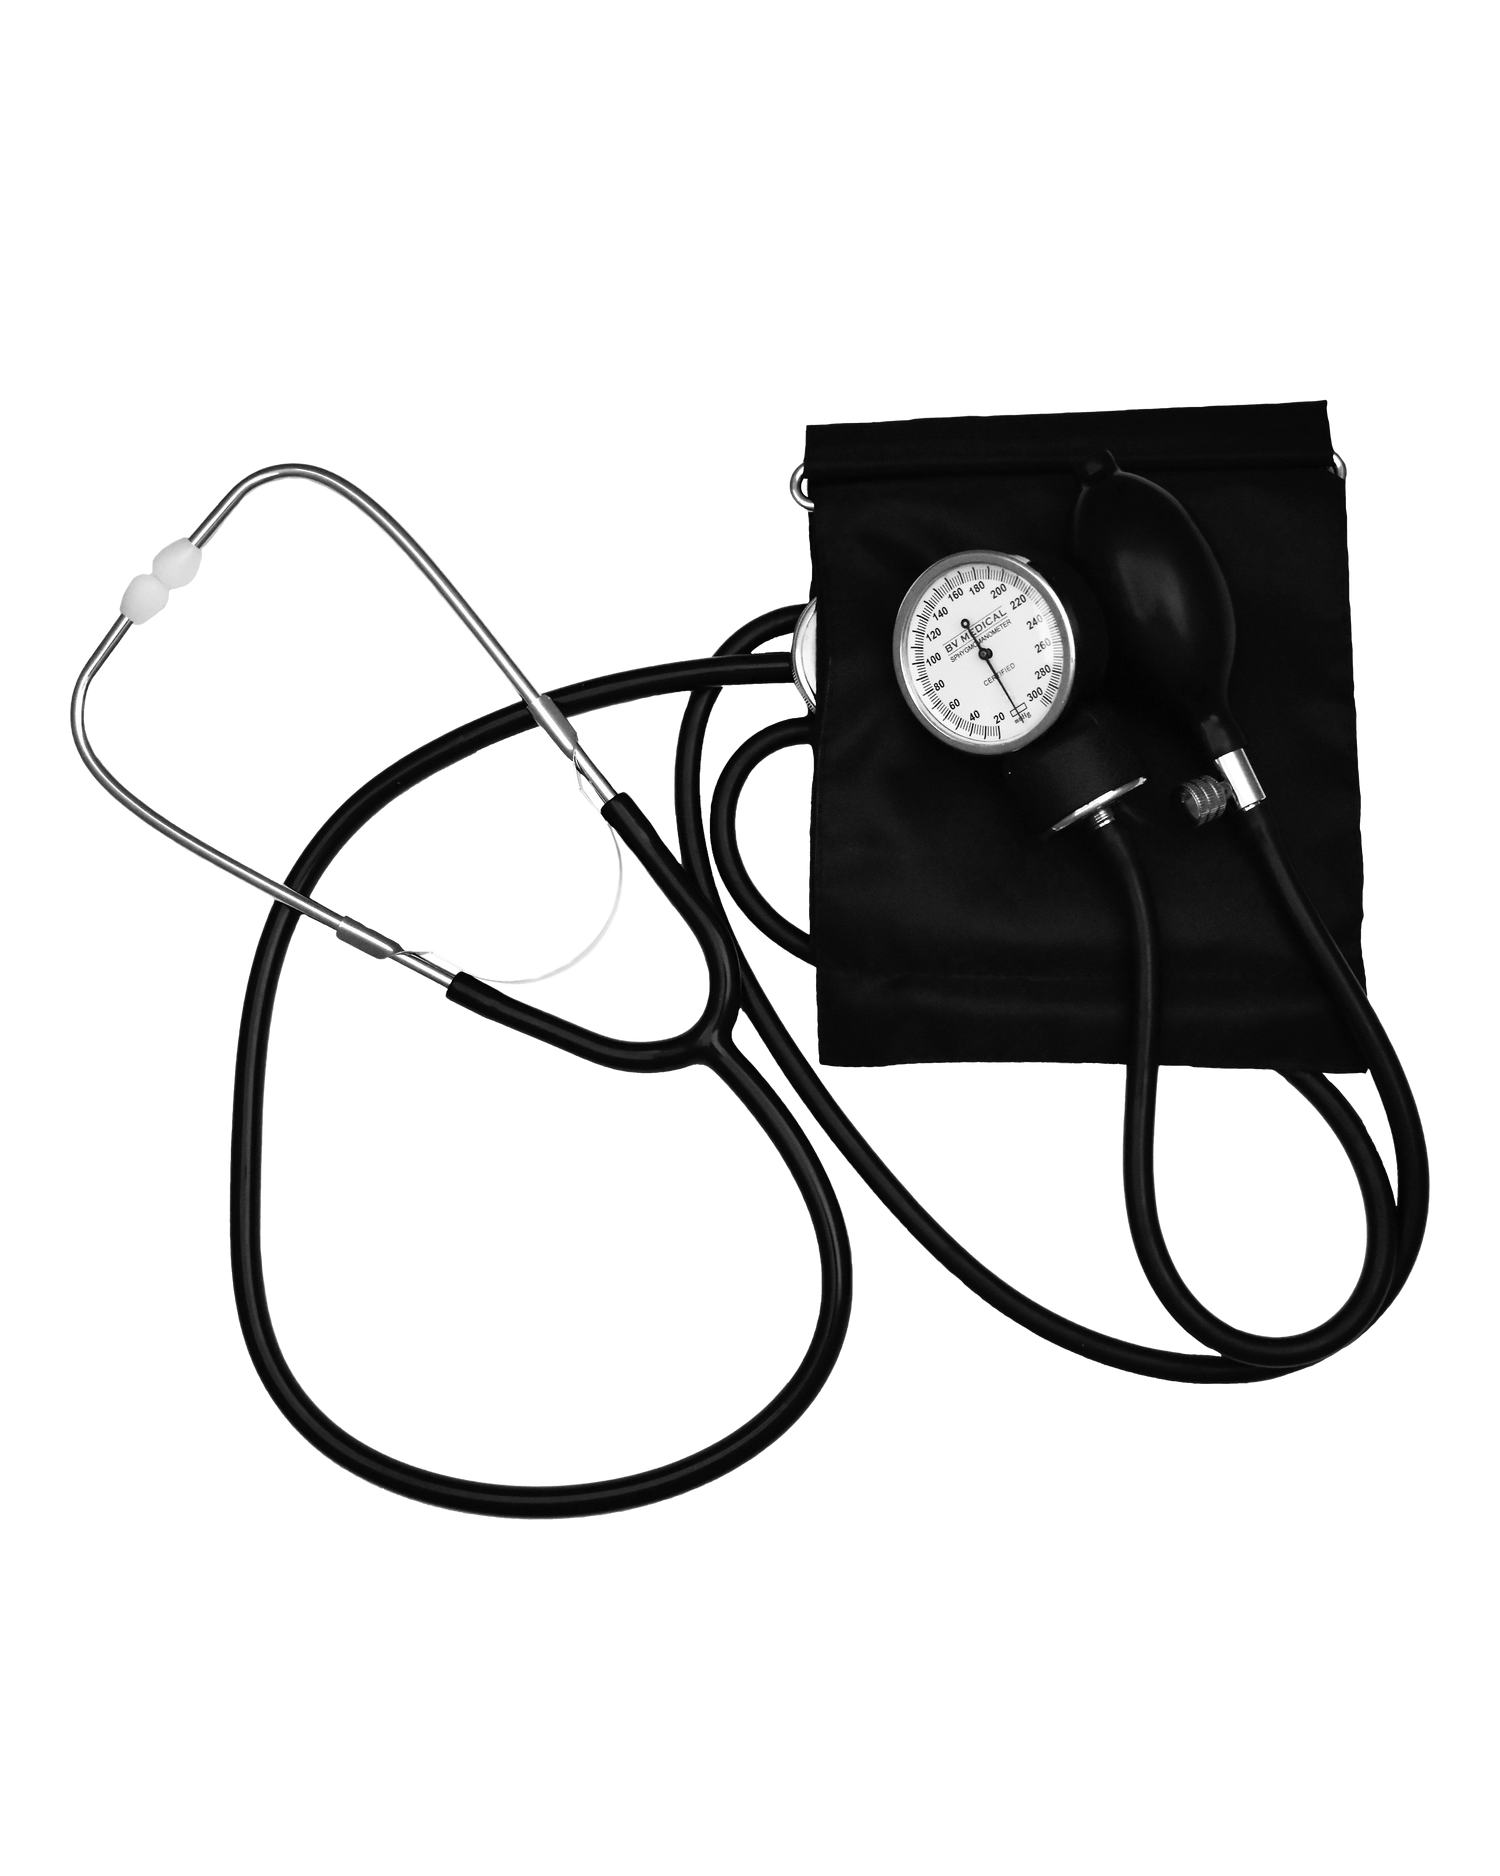 Self-Taking Home Latex Blood Pressure Kit